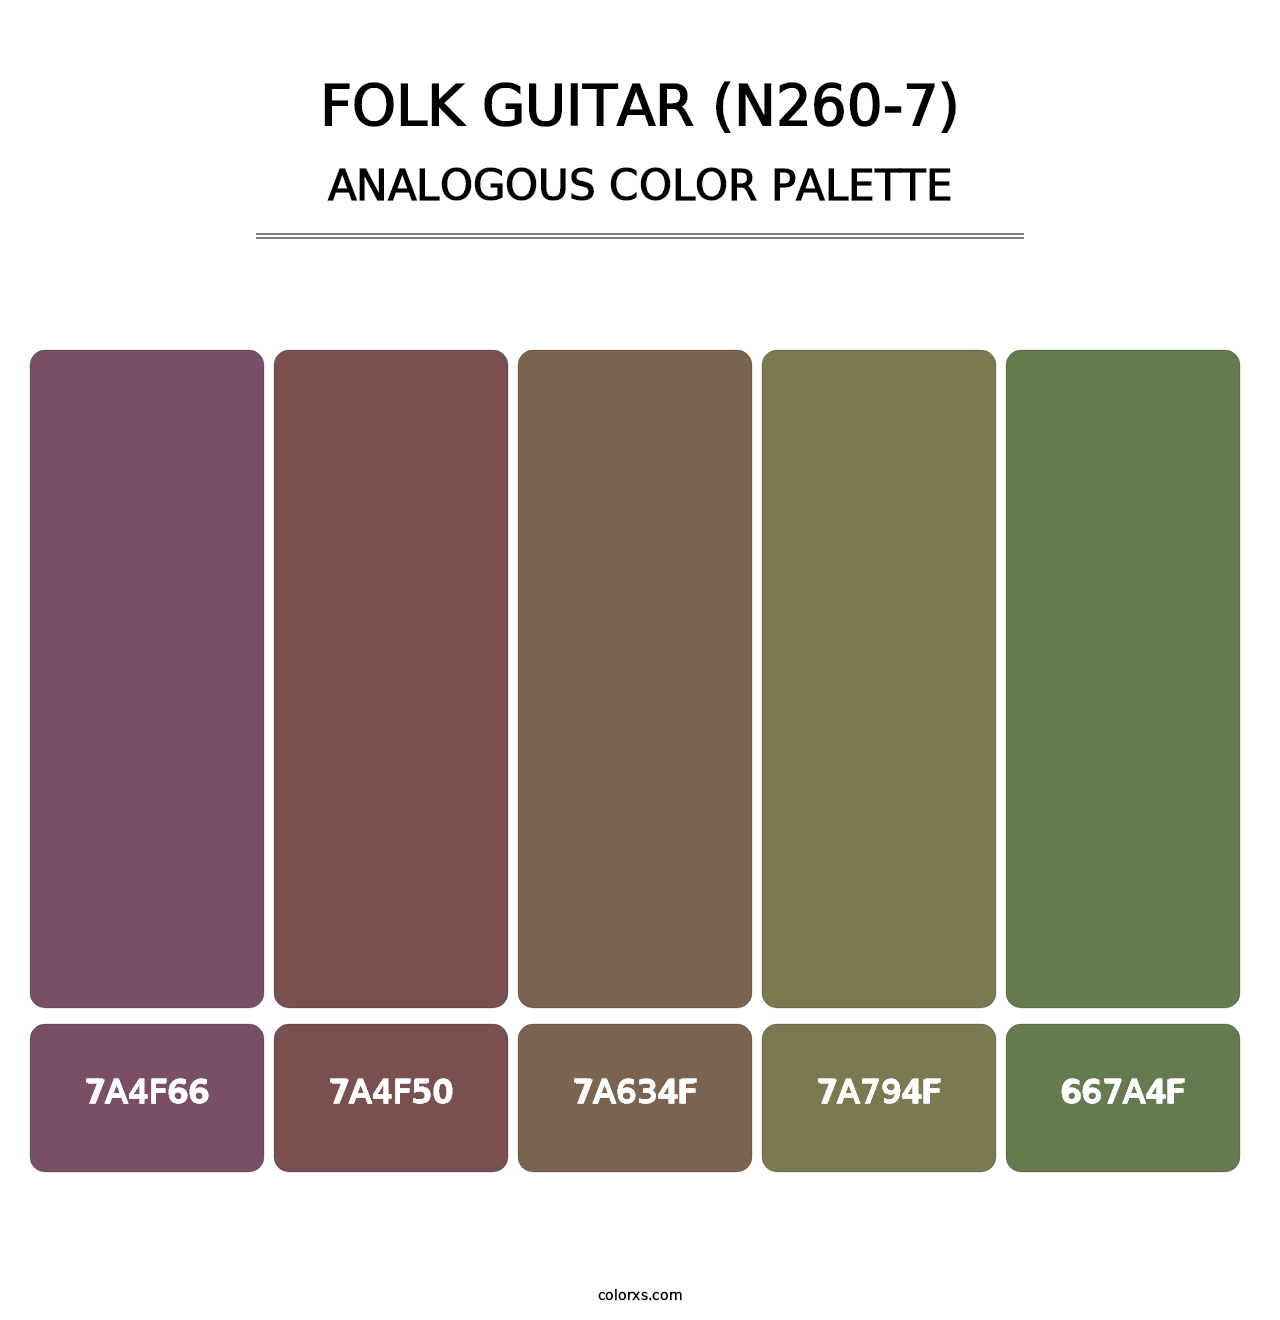 Folk Guitar (N260-7) - Analogous Color Palette